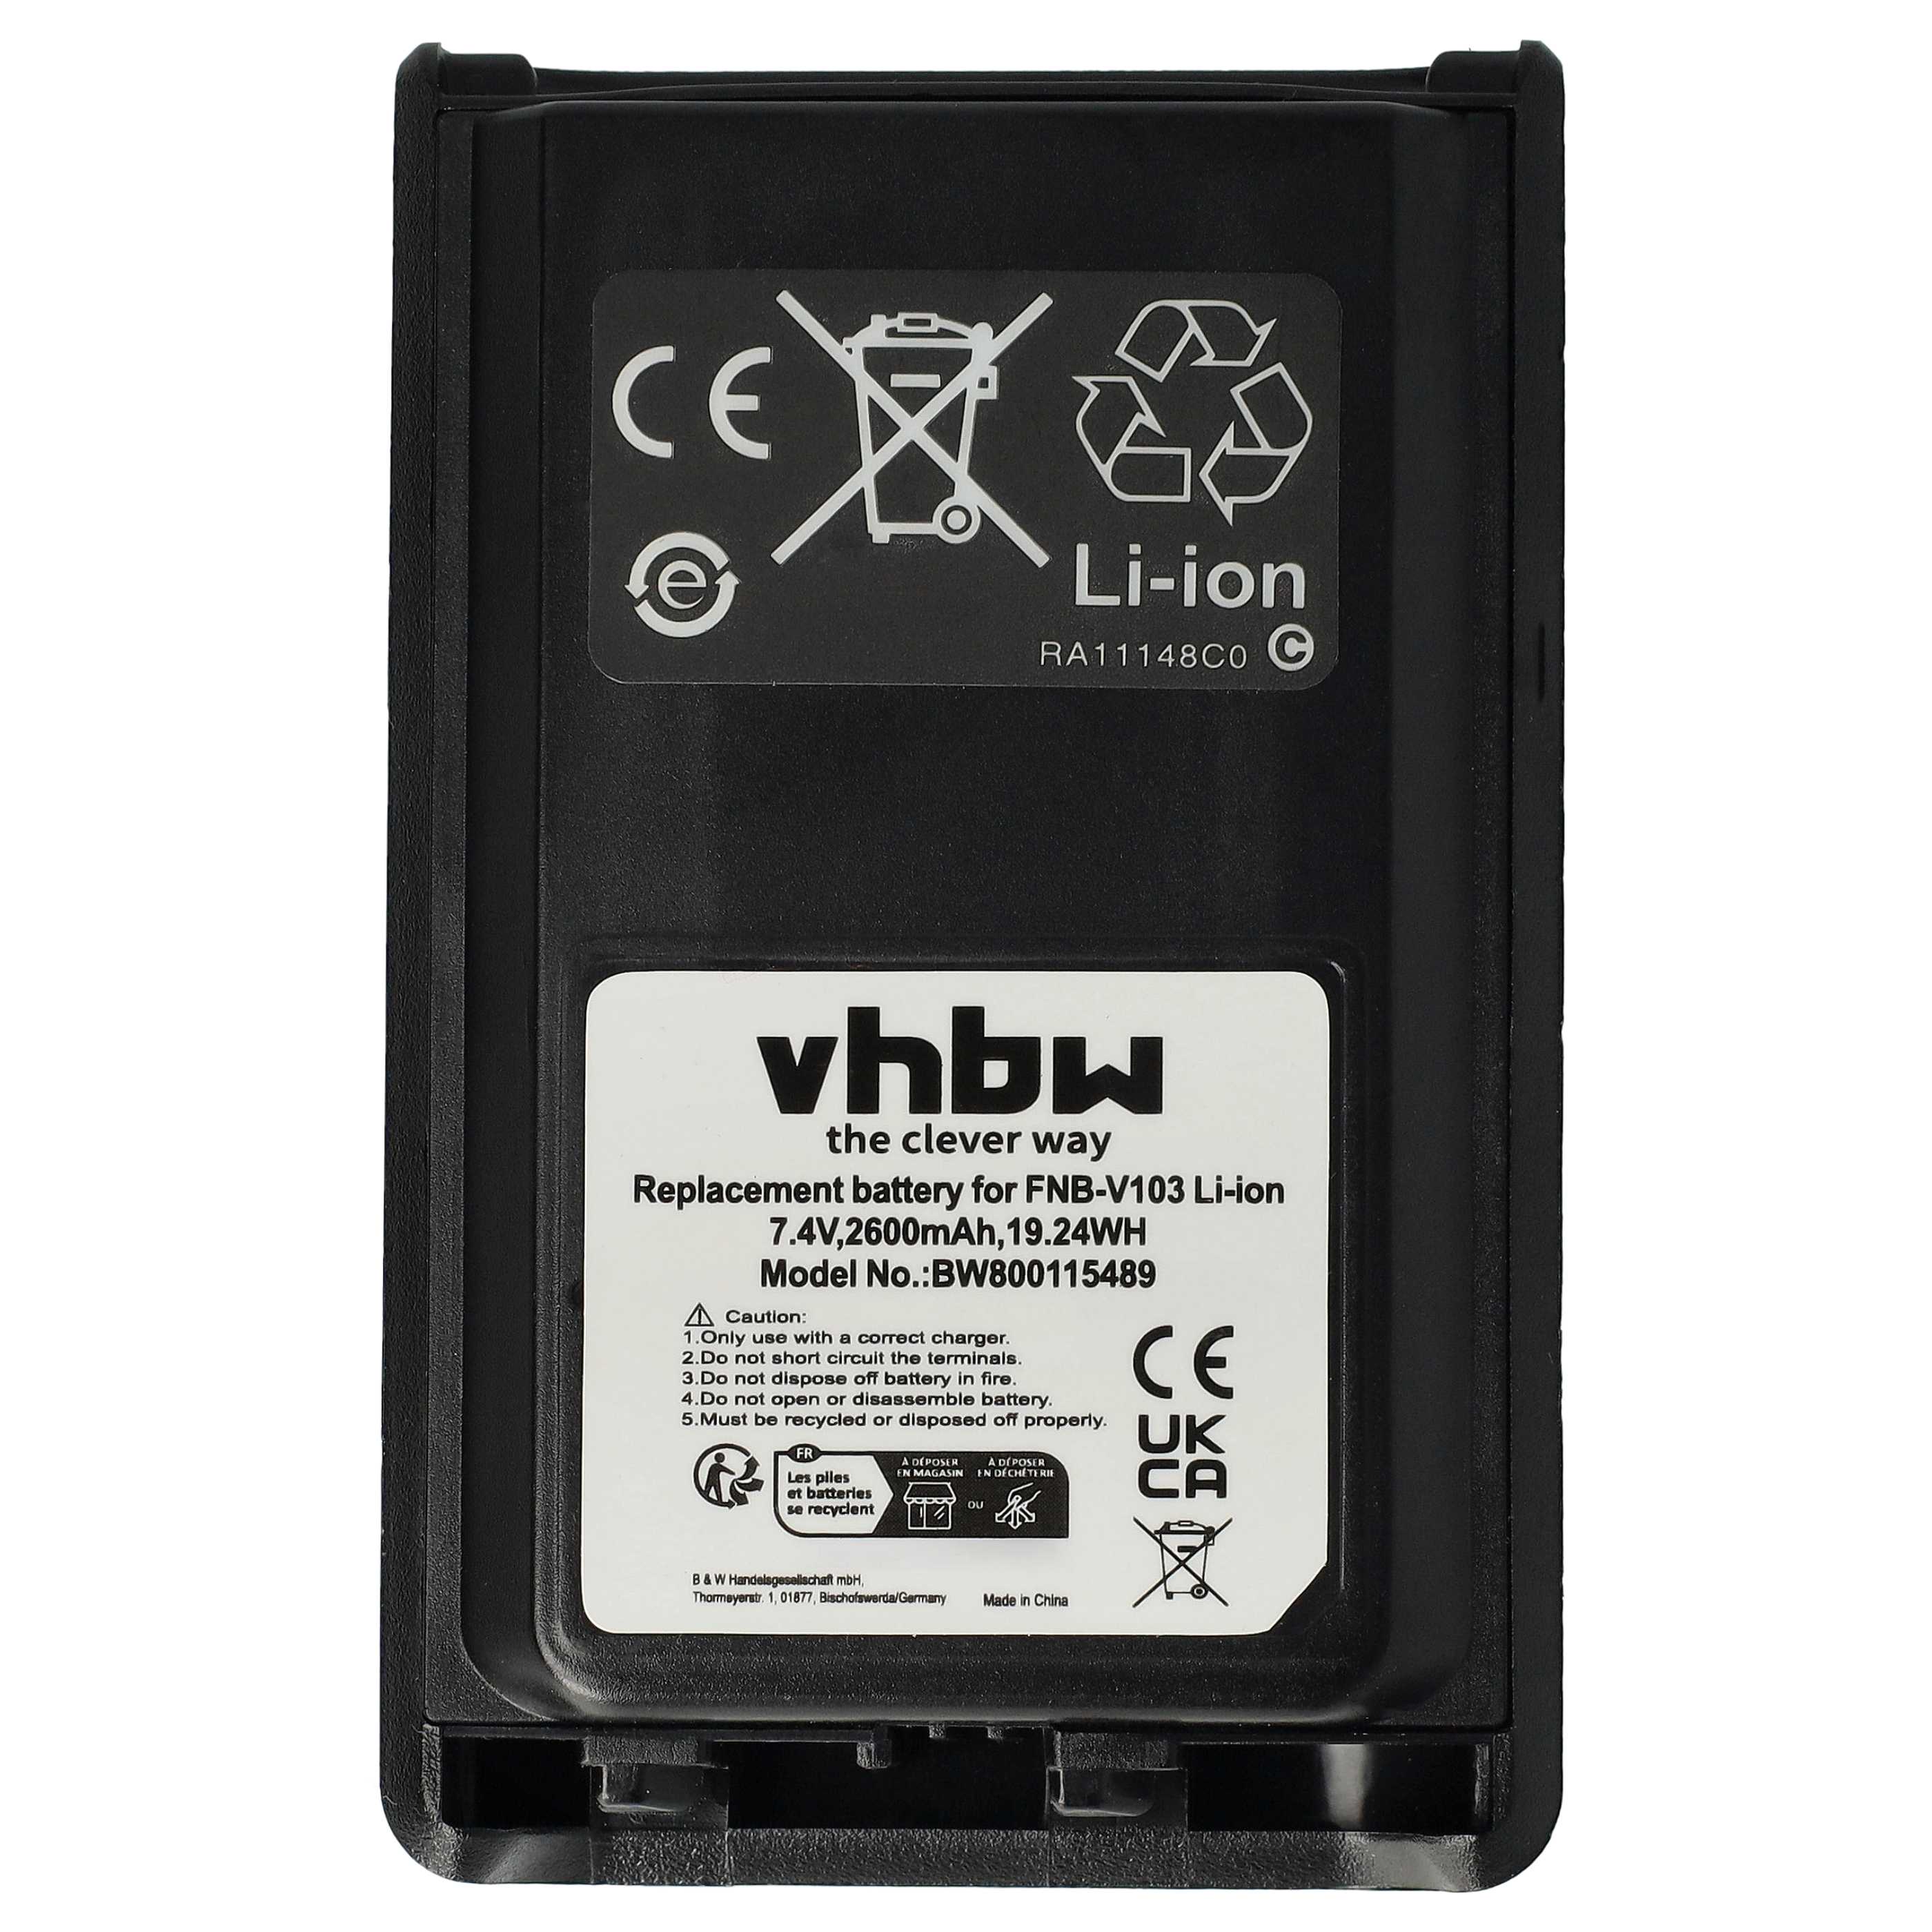 Radio Battery Replacement for Yaesu / Vertex FNB-V103, FNB-V104, FNB-V103LI, FNB-V104LI - 2600mAh 7.4V Li-Ion